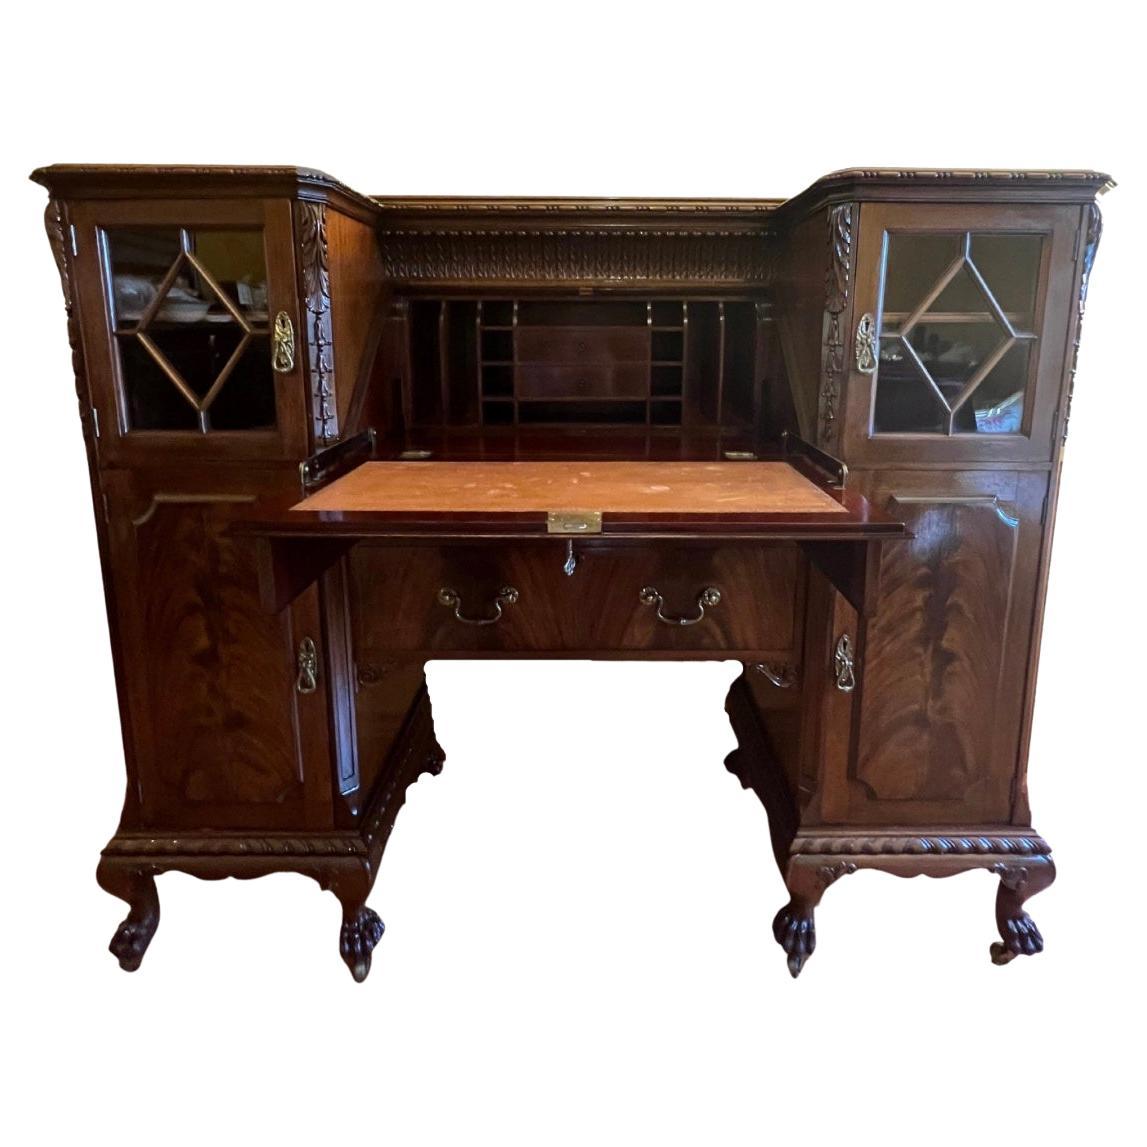 Antique English Mahogany Secretair Bureau Desk With Cabinets For Sale